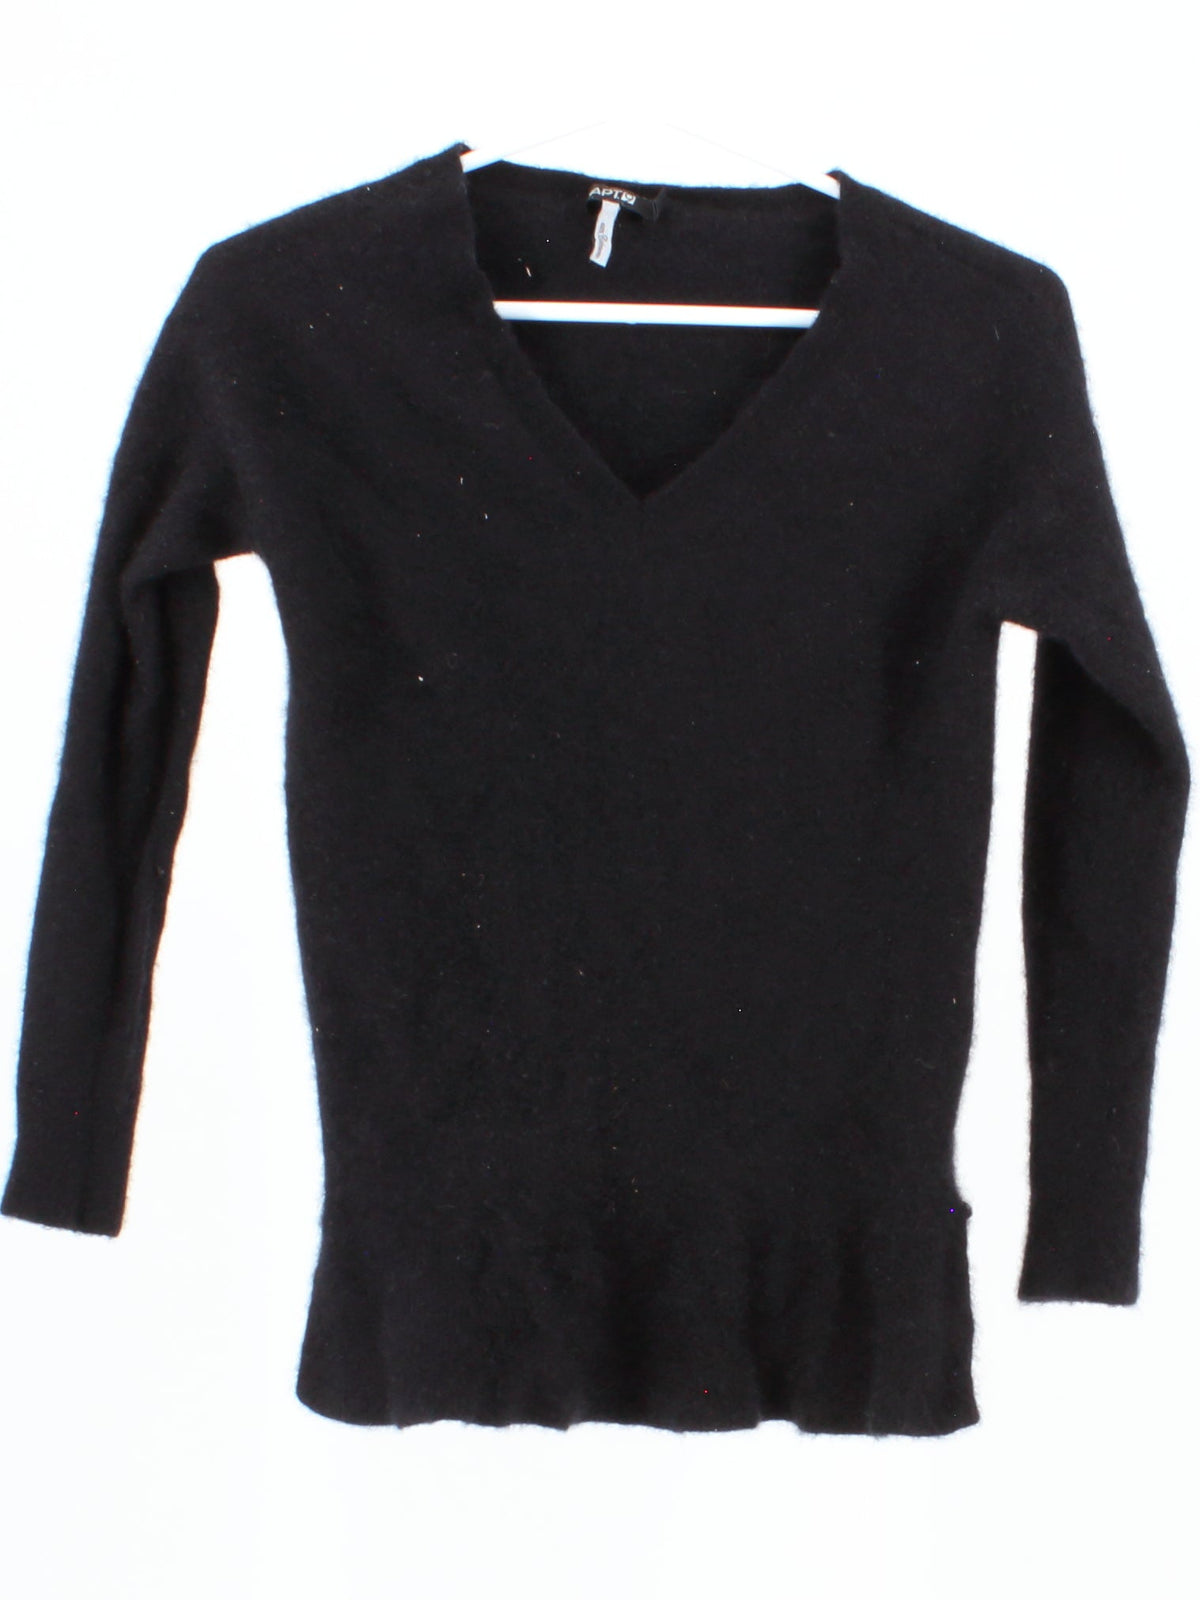 Apt.9 V-Neck Cashmere Sweater